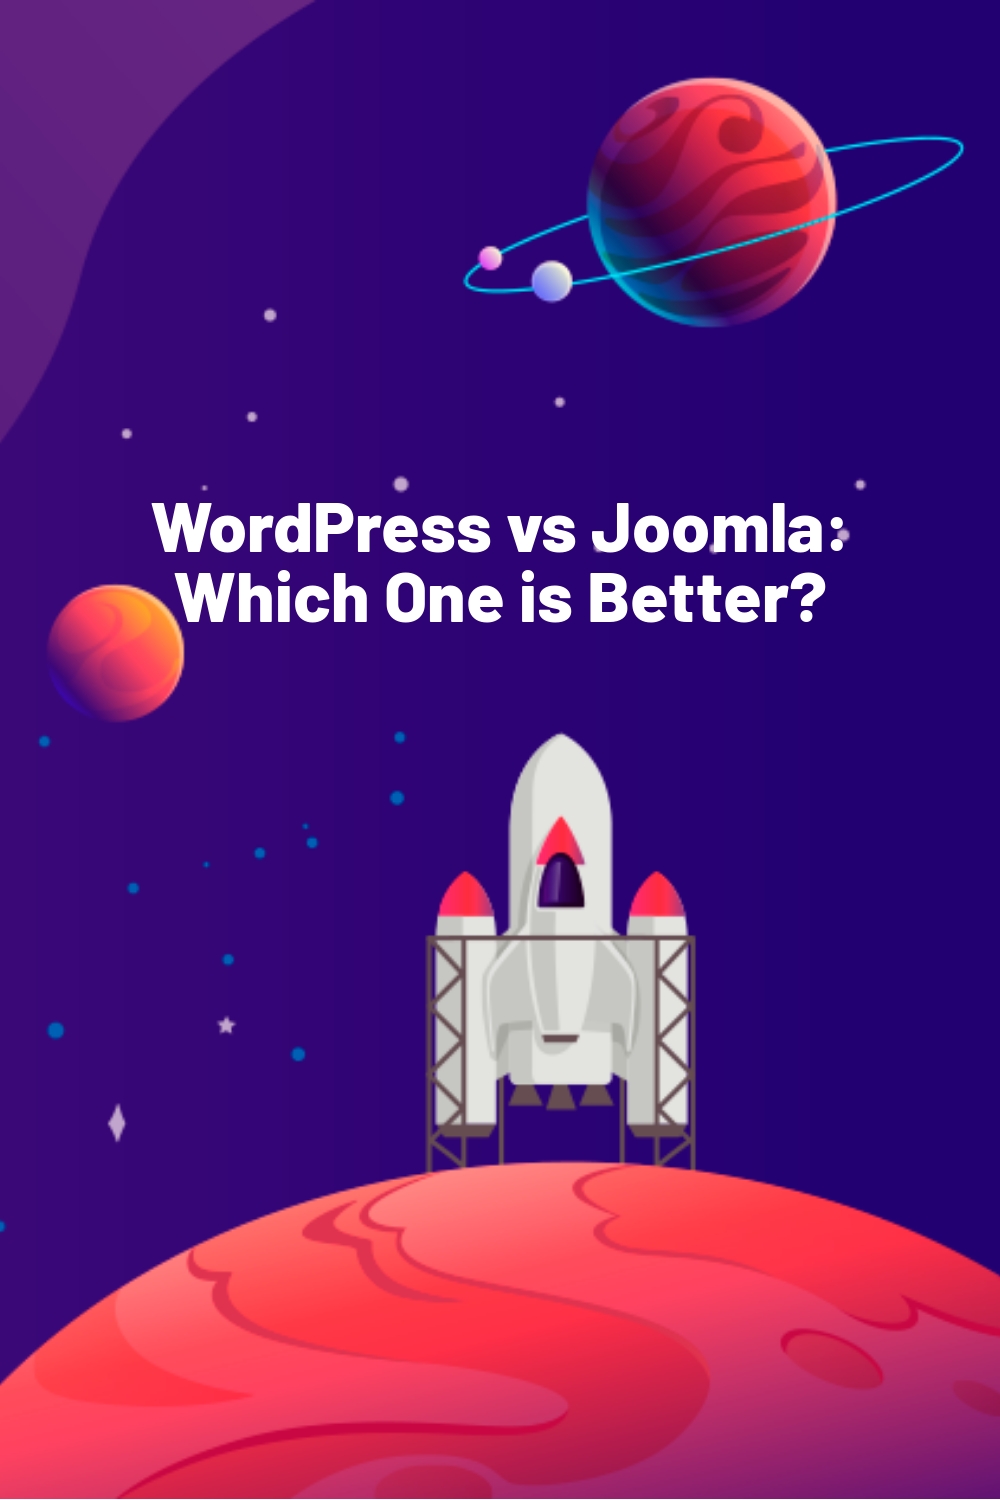 WordPress vs Joomla: Which One is Better?